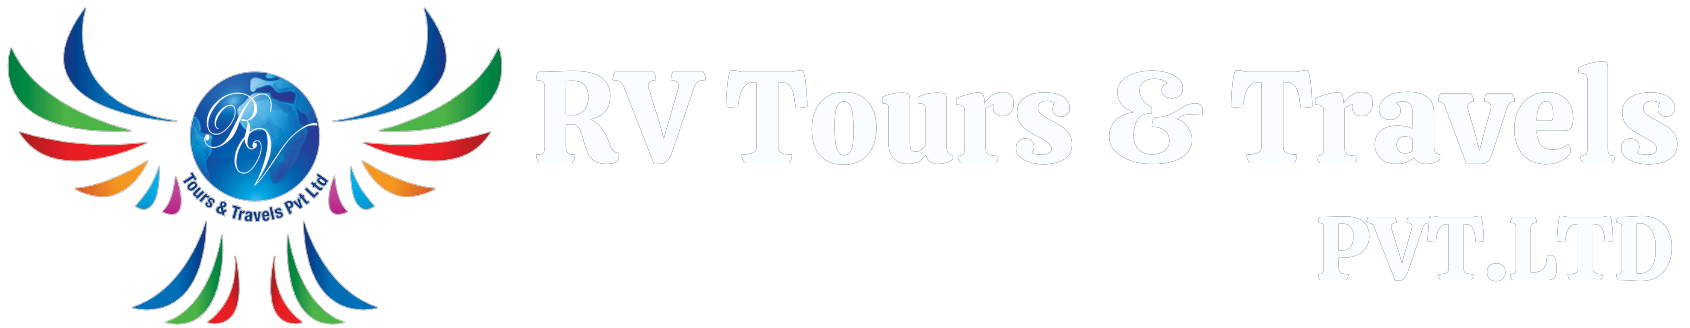 tours & travels hyderabad telangana